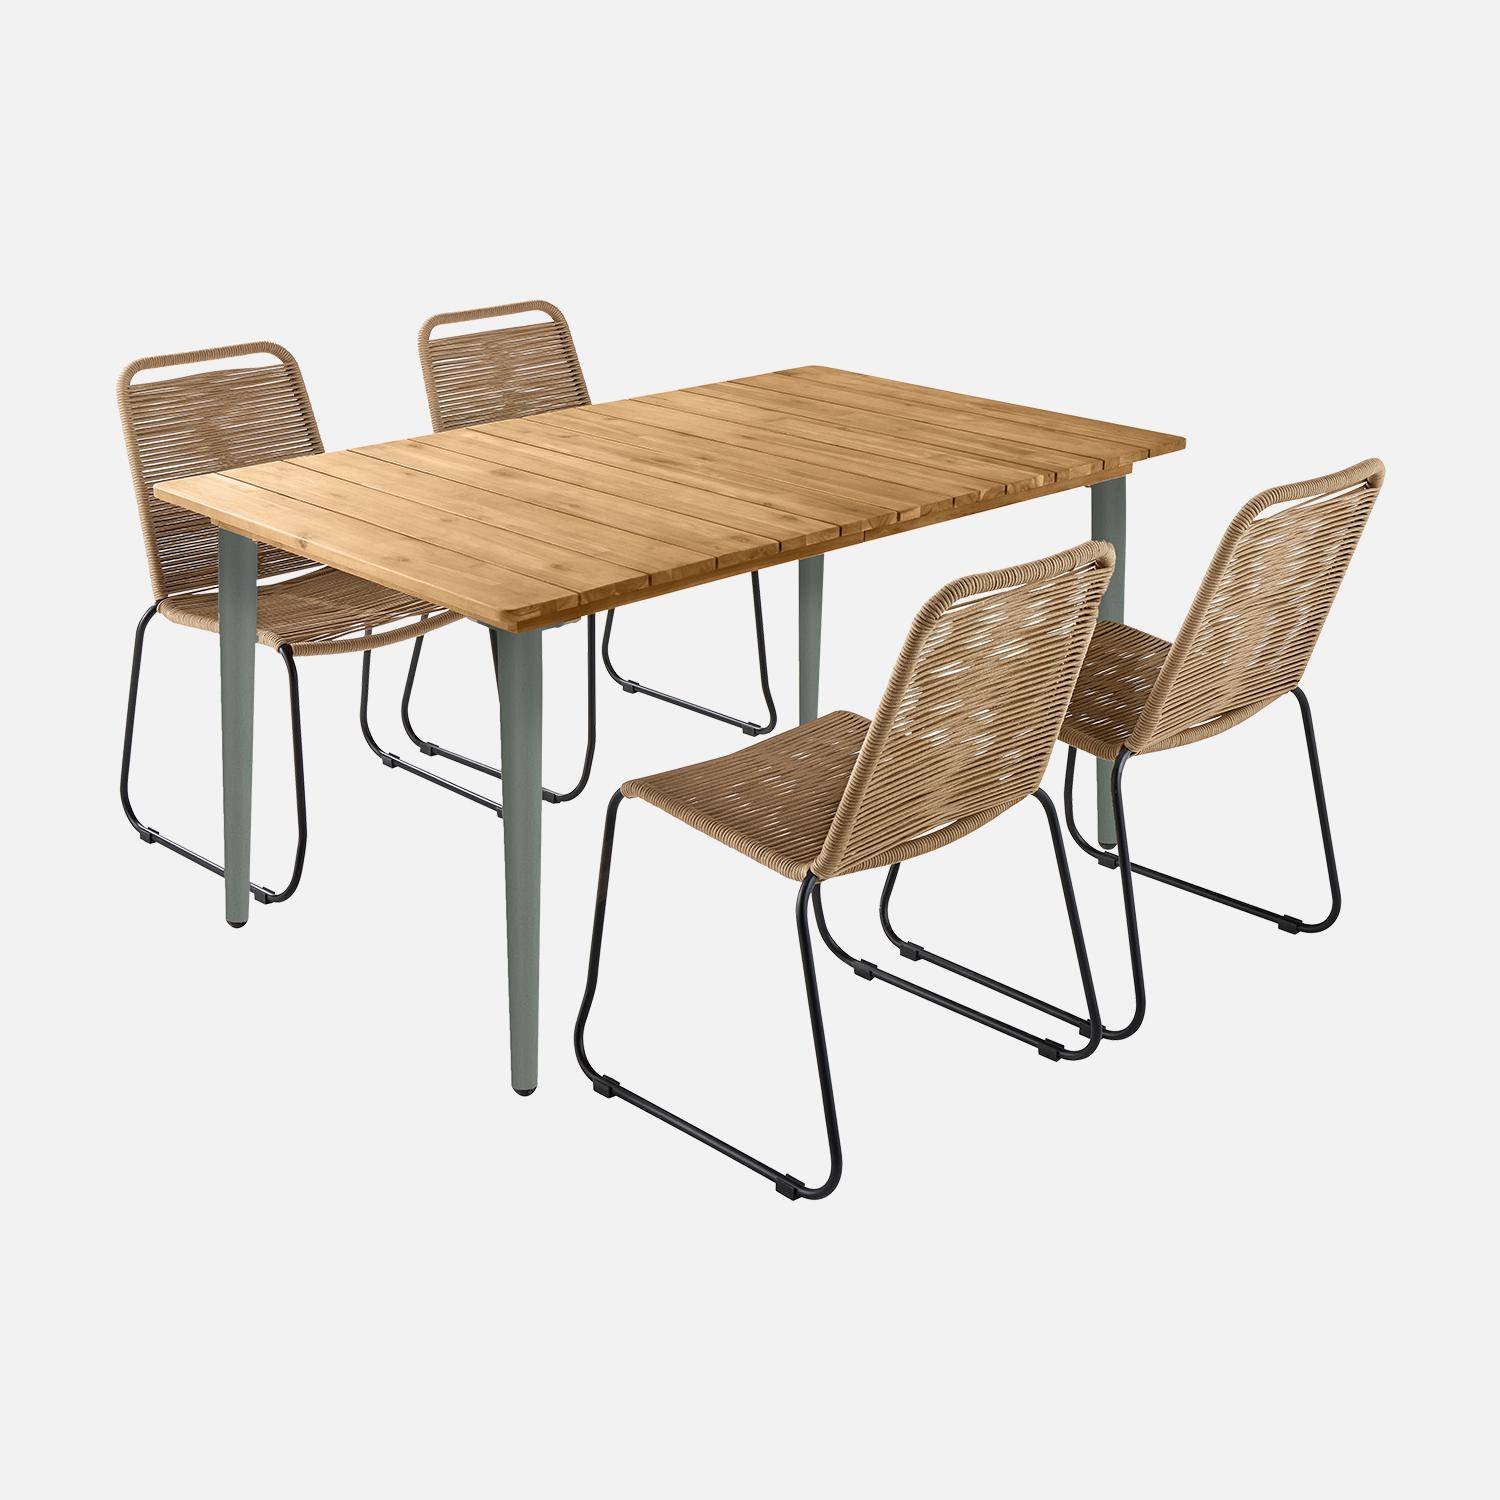 Table de jardin MARINGA bois et métal savane 150cm + 4 chaises de jardin en corde beige BRASILIA, empilables,sweeek,Photo3